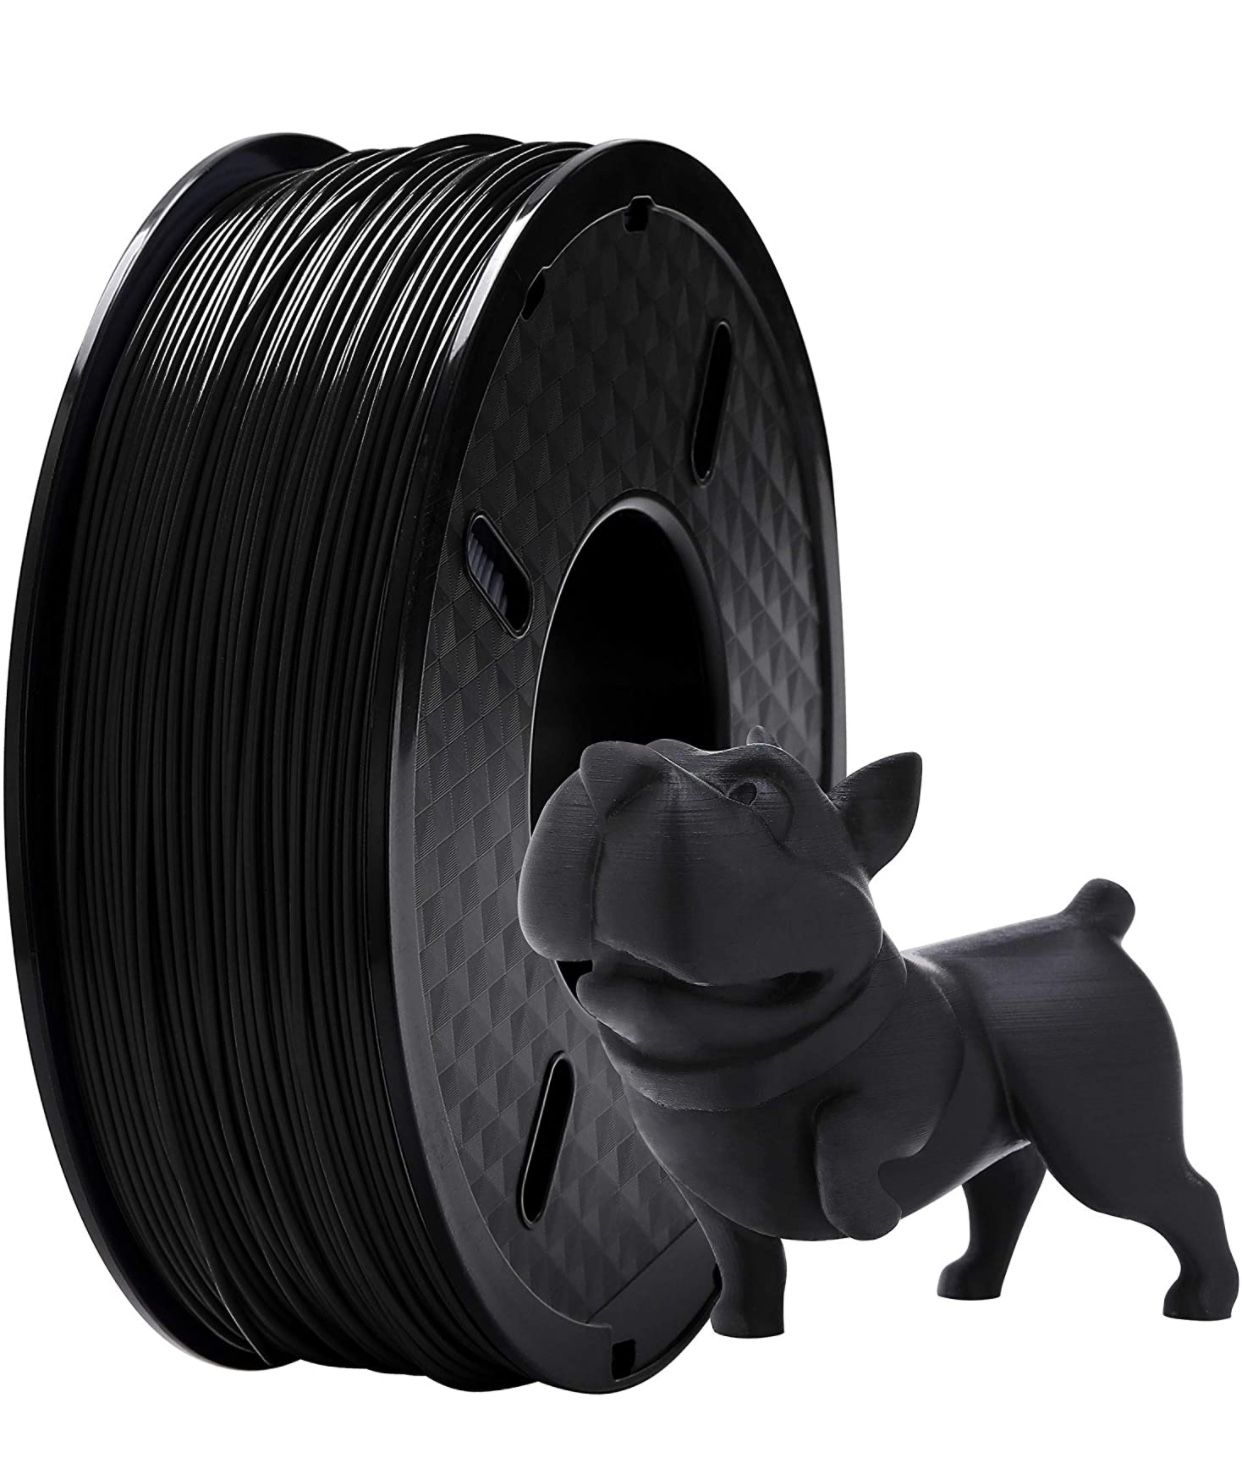 DOYOLLA PLA 3D Printer Printing Filament, 1.75 mm, Dimensional Accuracy +/- 0.02 mm, 1 kg Spool, Fit Most FDM Printer (Black)